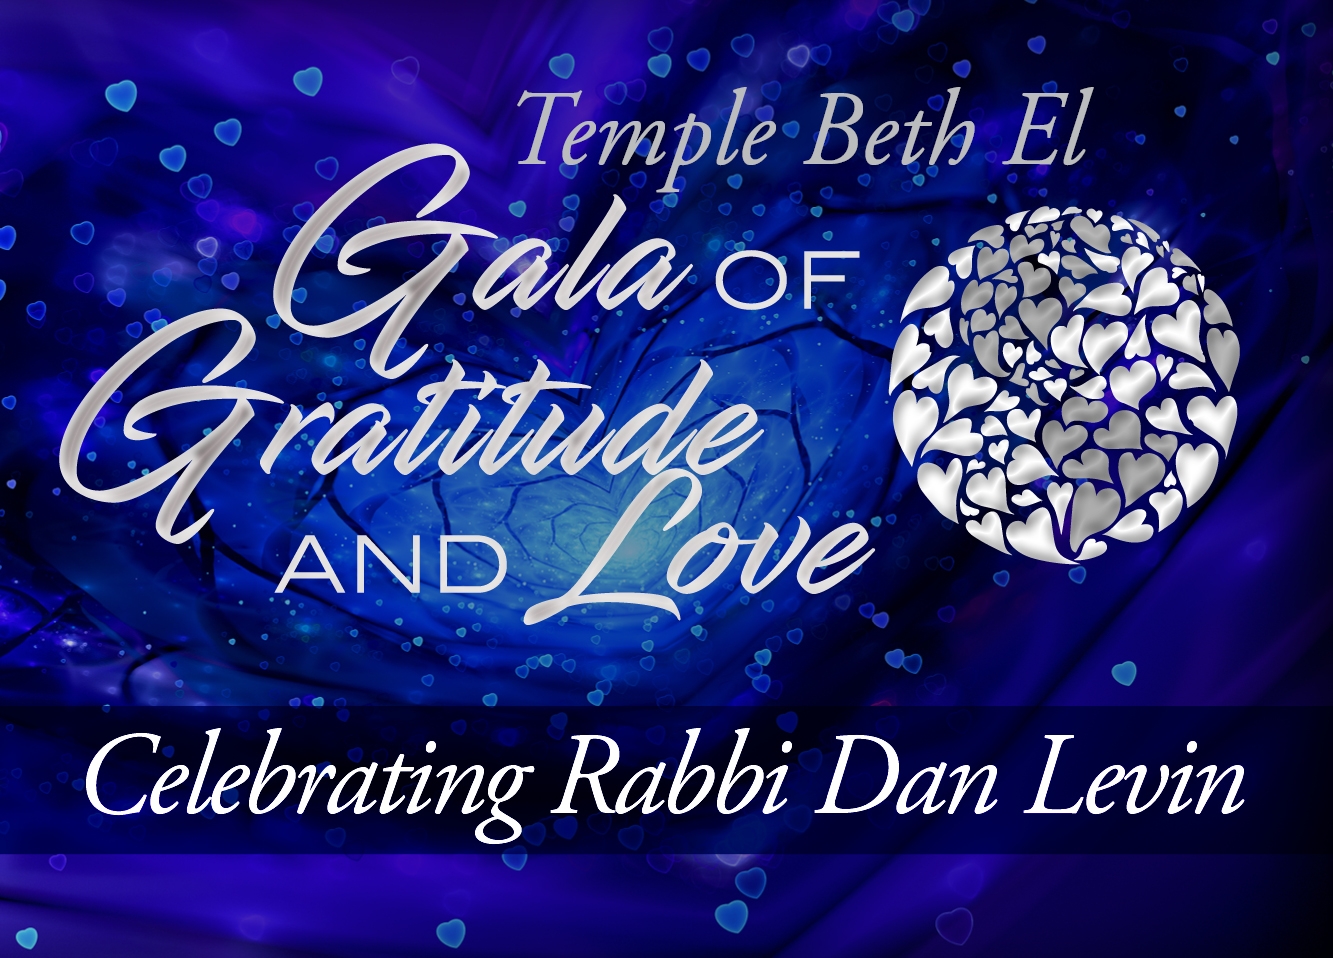 Gala of Gratitude and Love celebrating Rabbi Dan Levin, 2022, Temple Beth El of Boca Raton event graphic